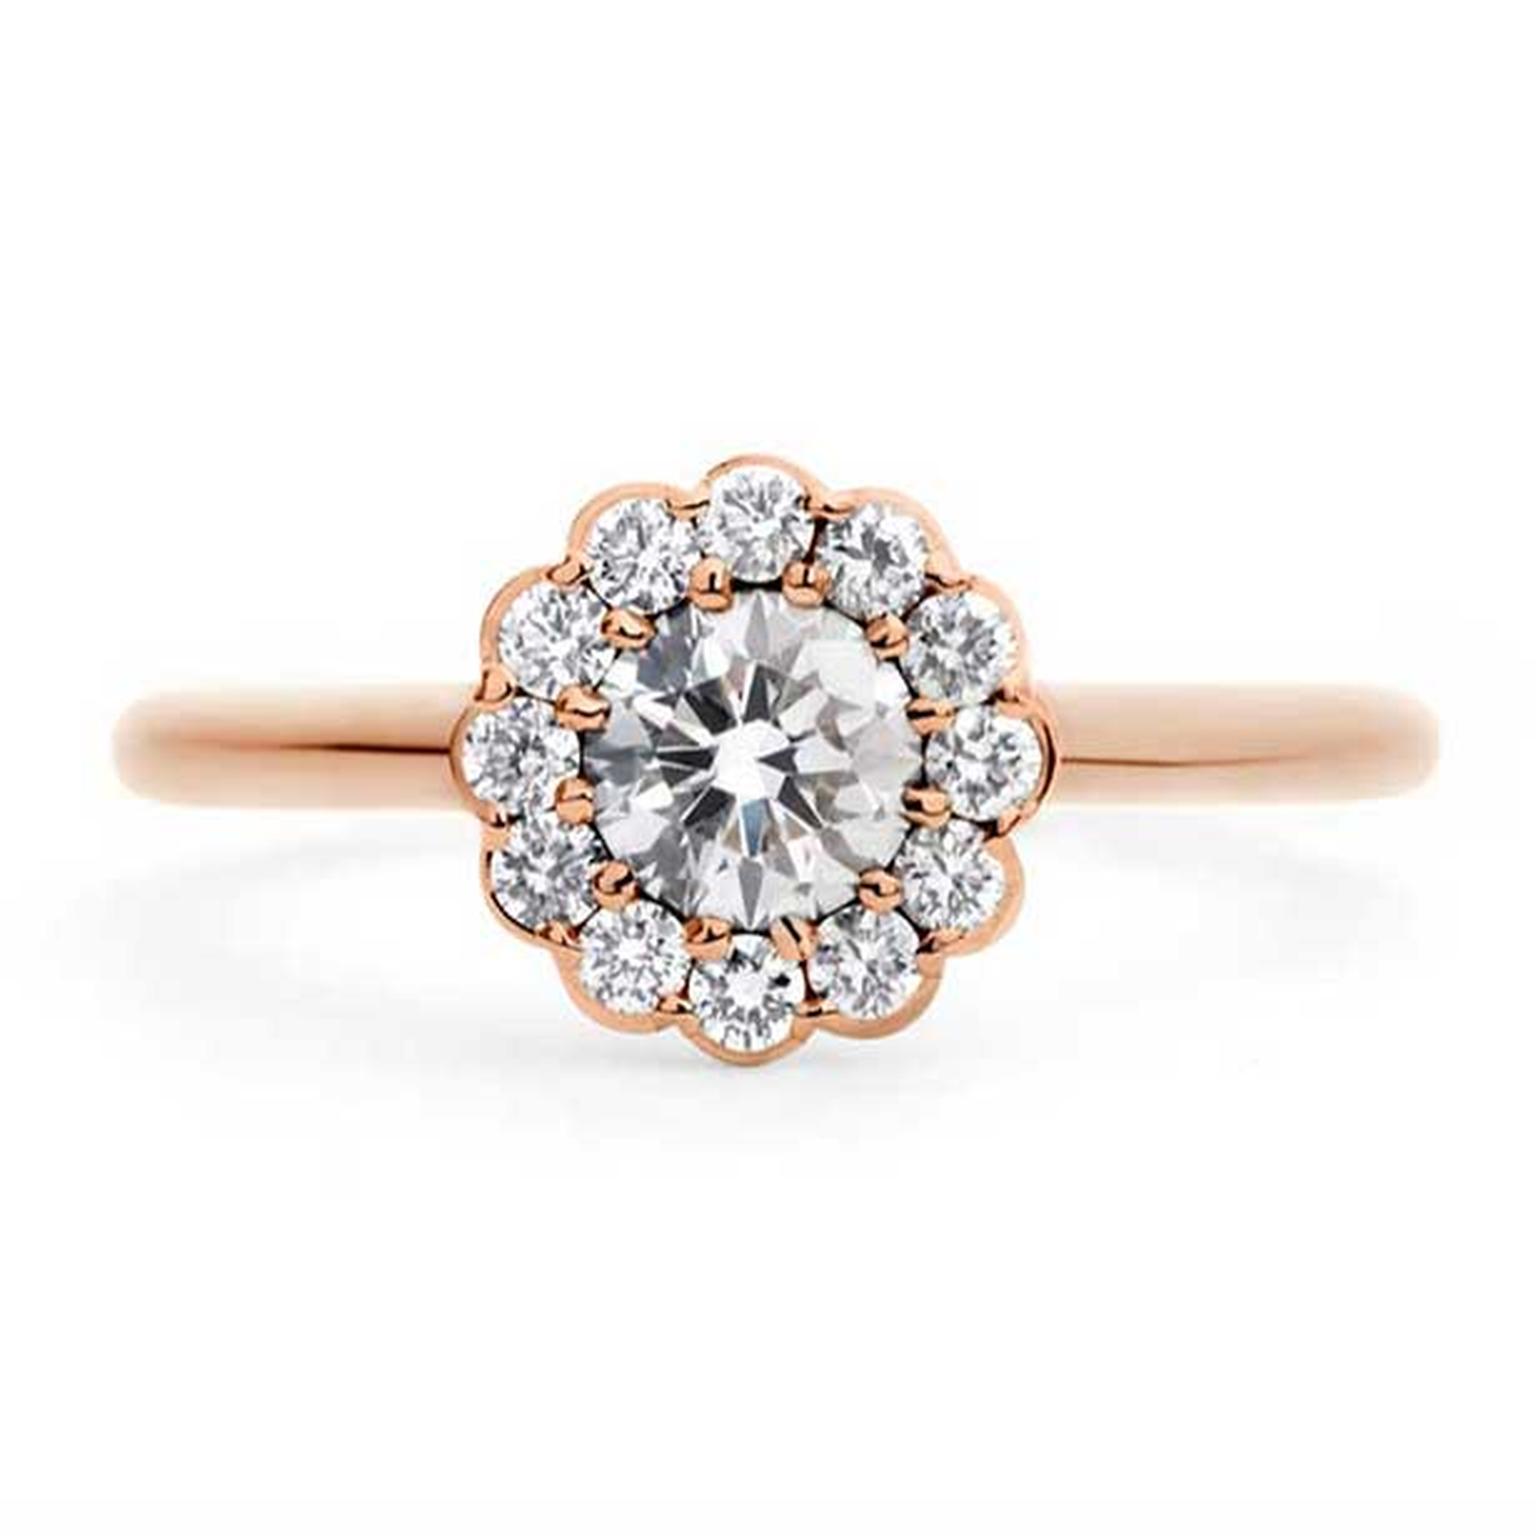 Andrew Geoghegan engagement ring